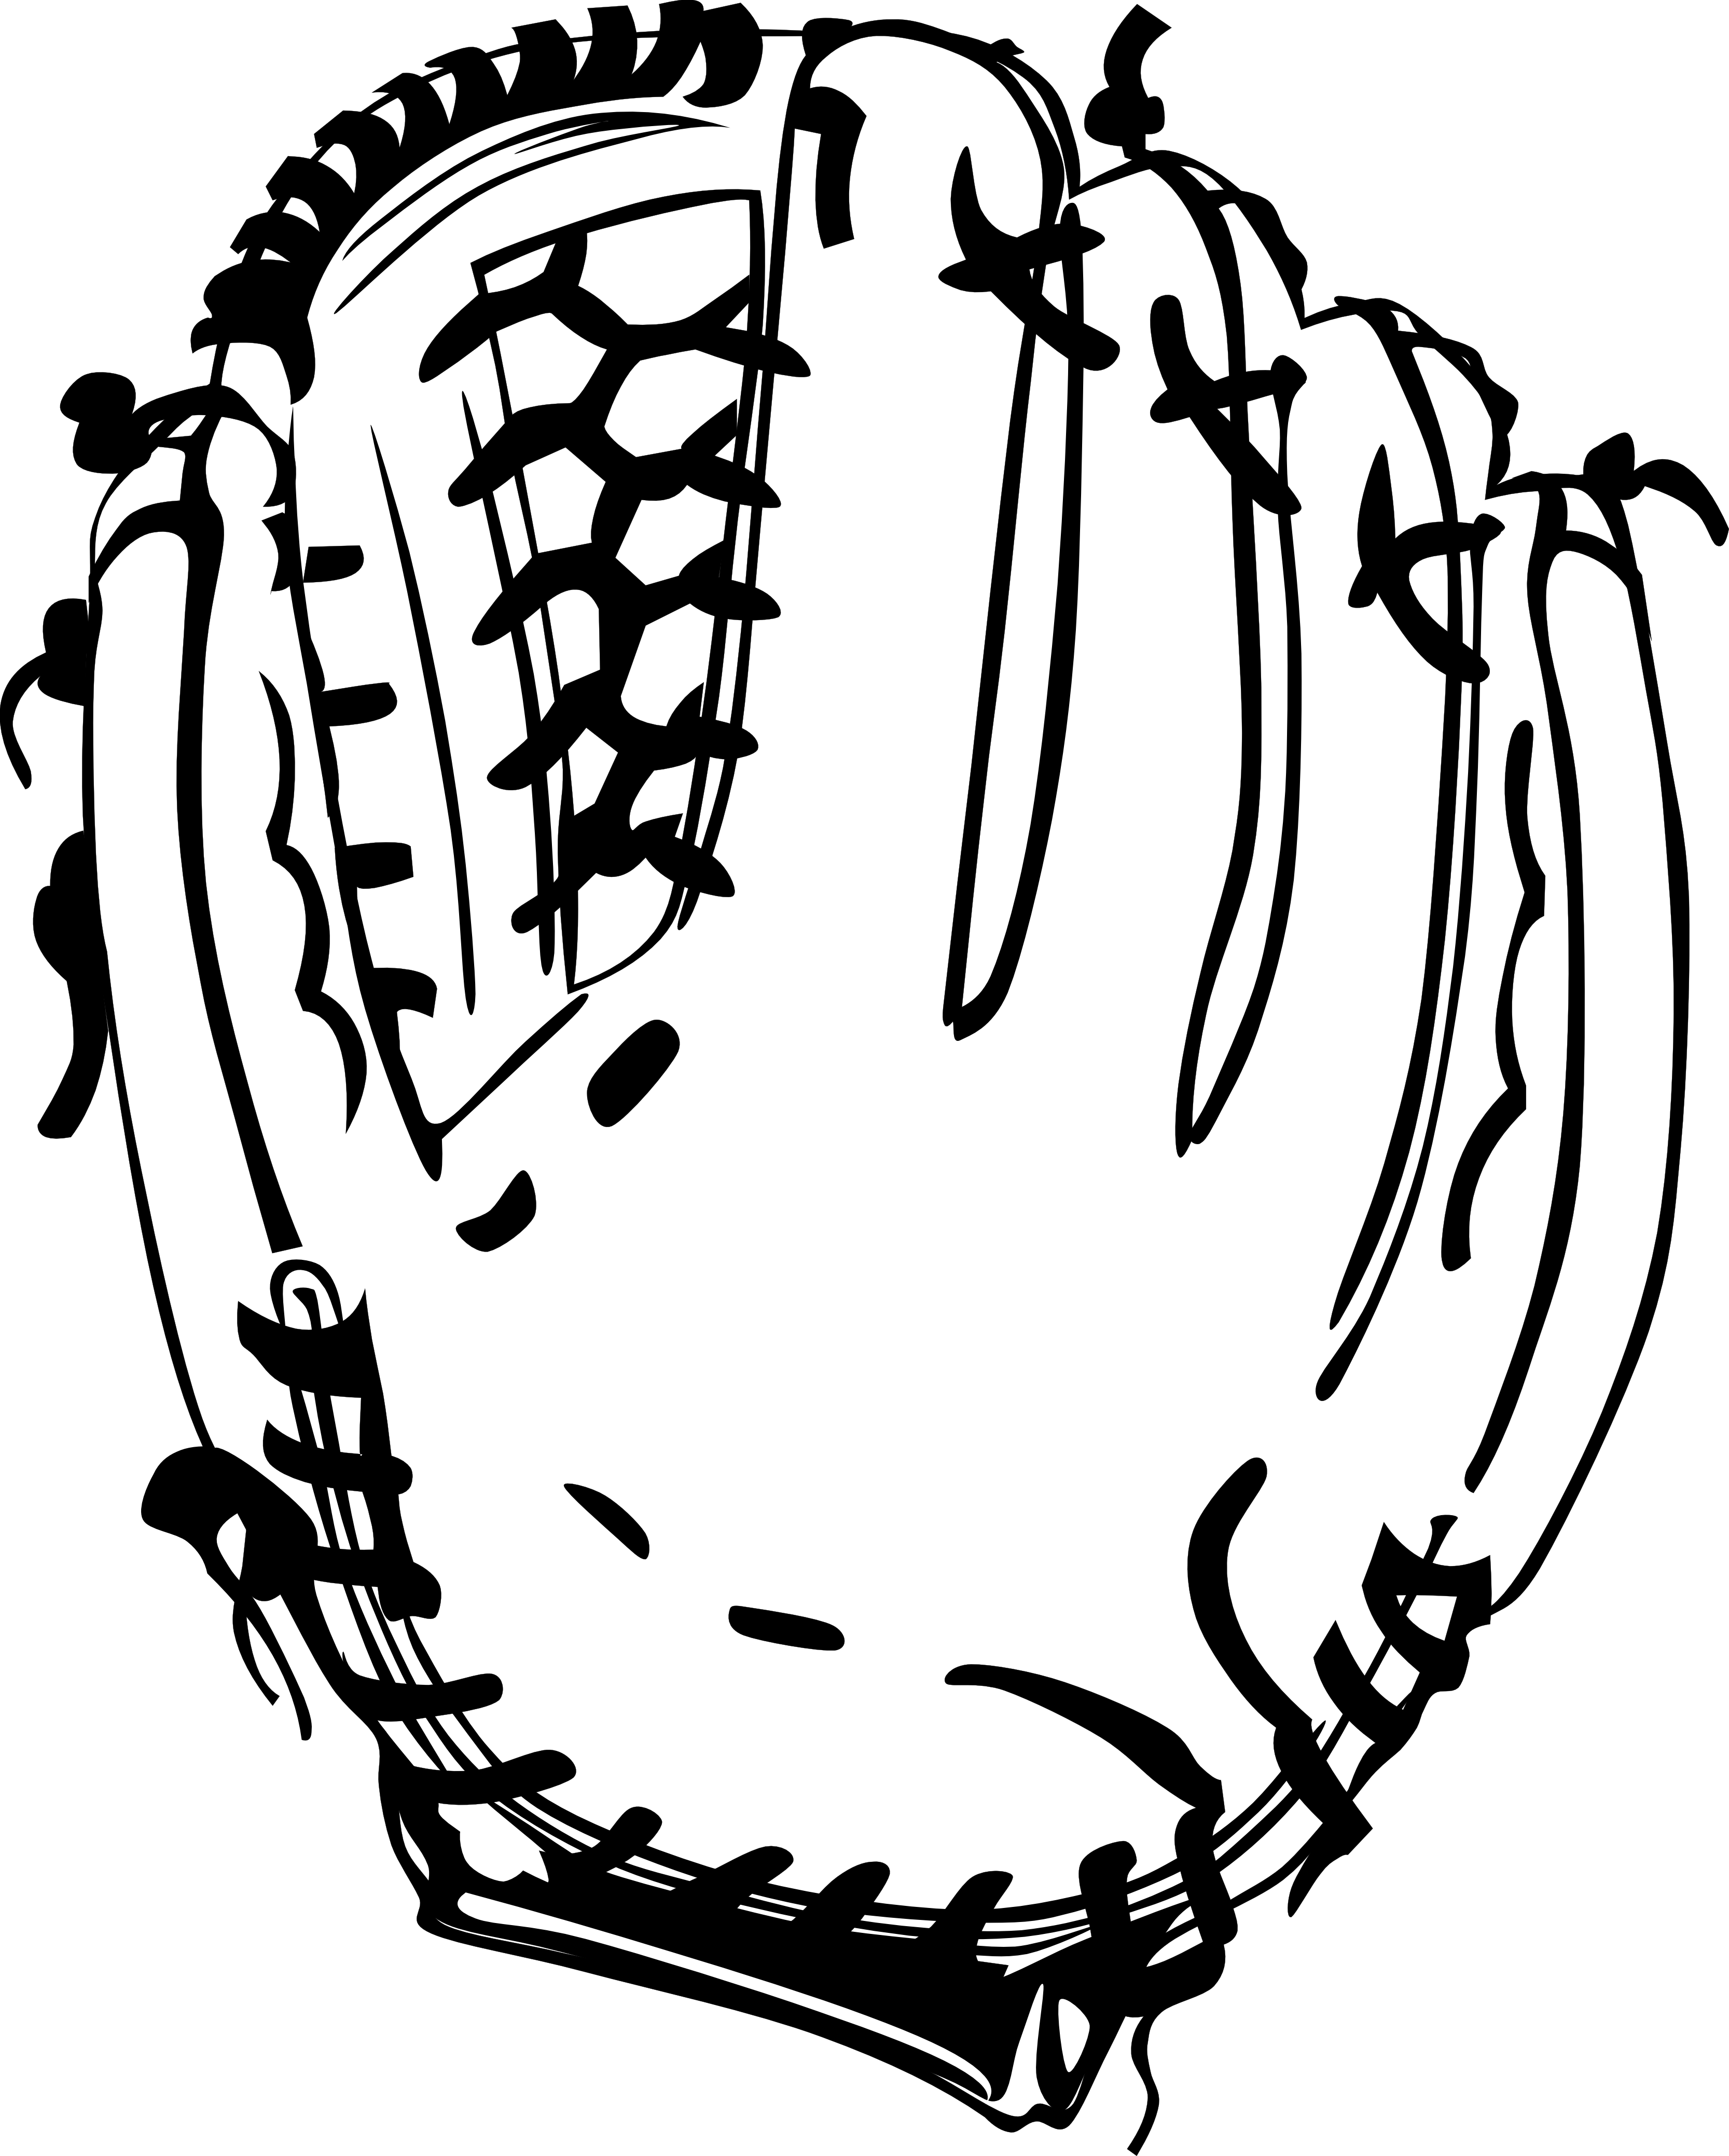 Black and white baseball player clipart